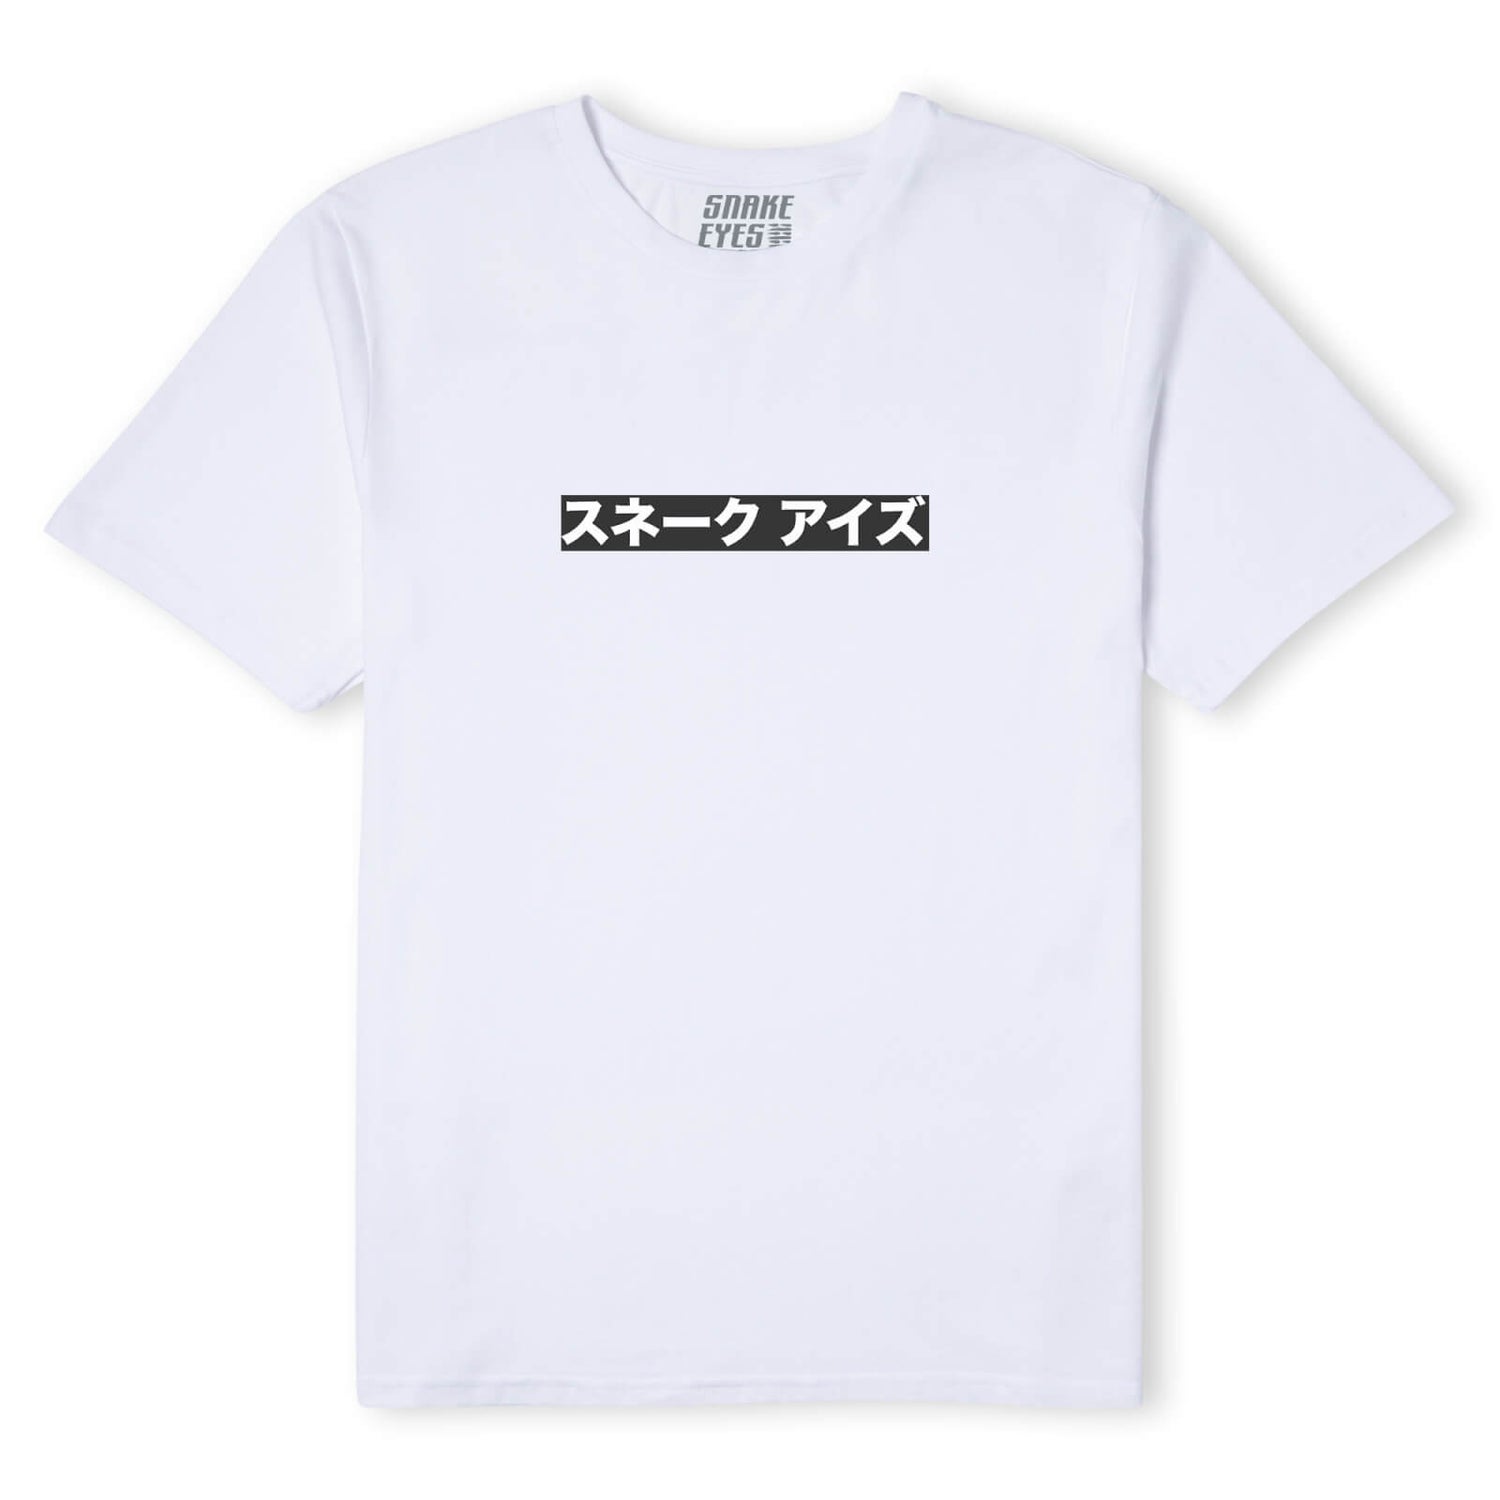 Camiseta G.I. Joe Motion para hombre - Blanco